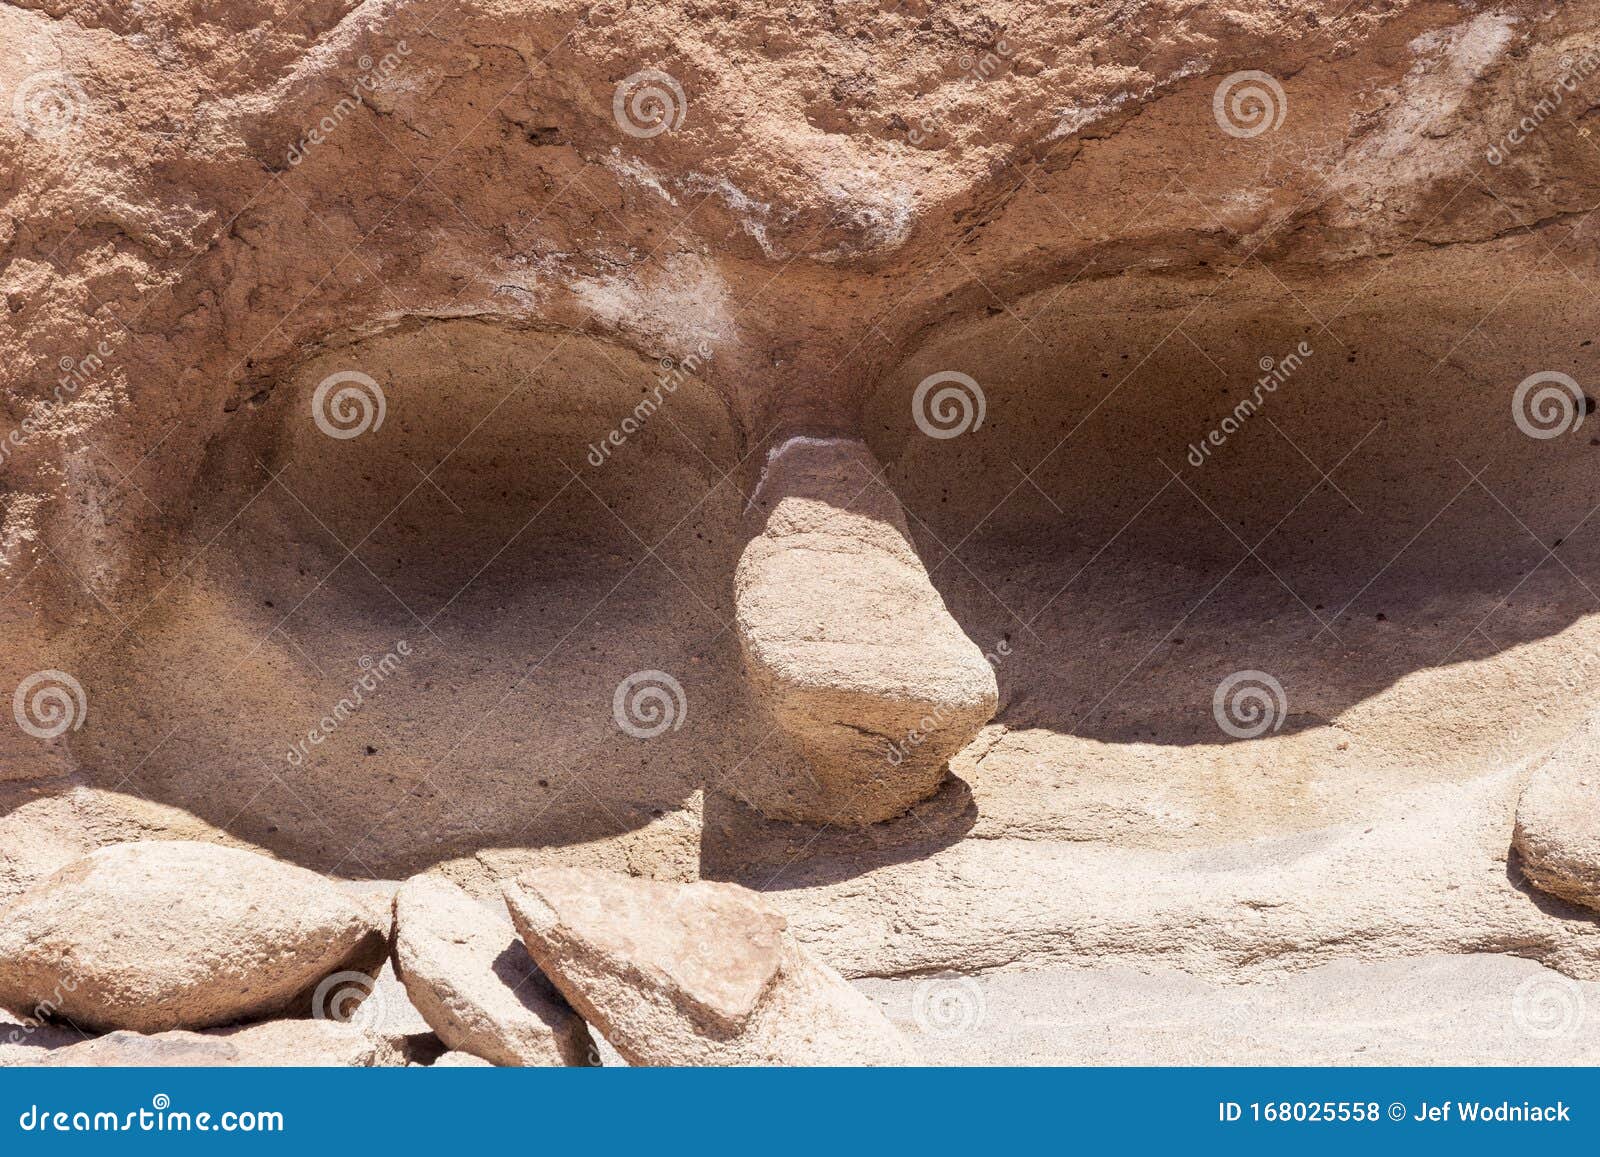 rocks at yerba buenas petroglyph site. near san pedro de atacama